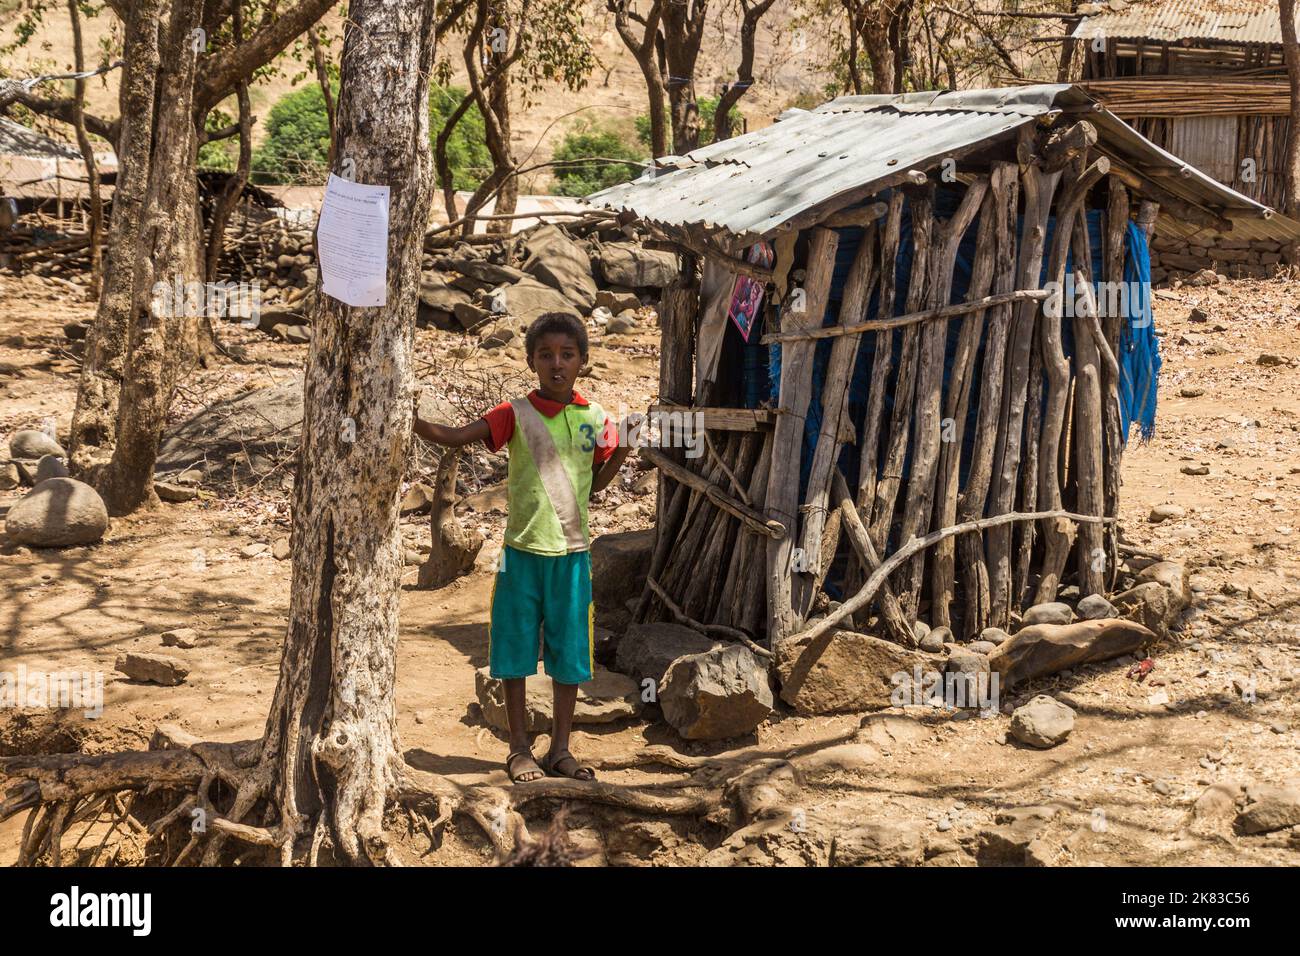 NORTHWESTERN ETHIOPIA - MARCH 18, 2019: Local boy in a small village in northeastern Ethiopia Stock Photo